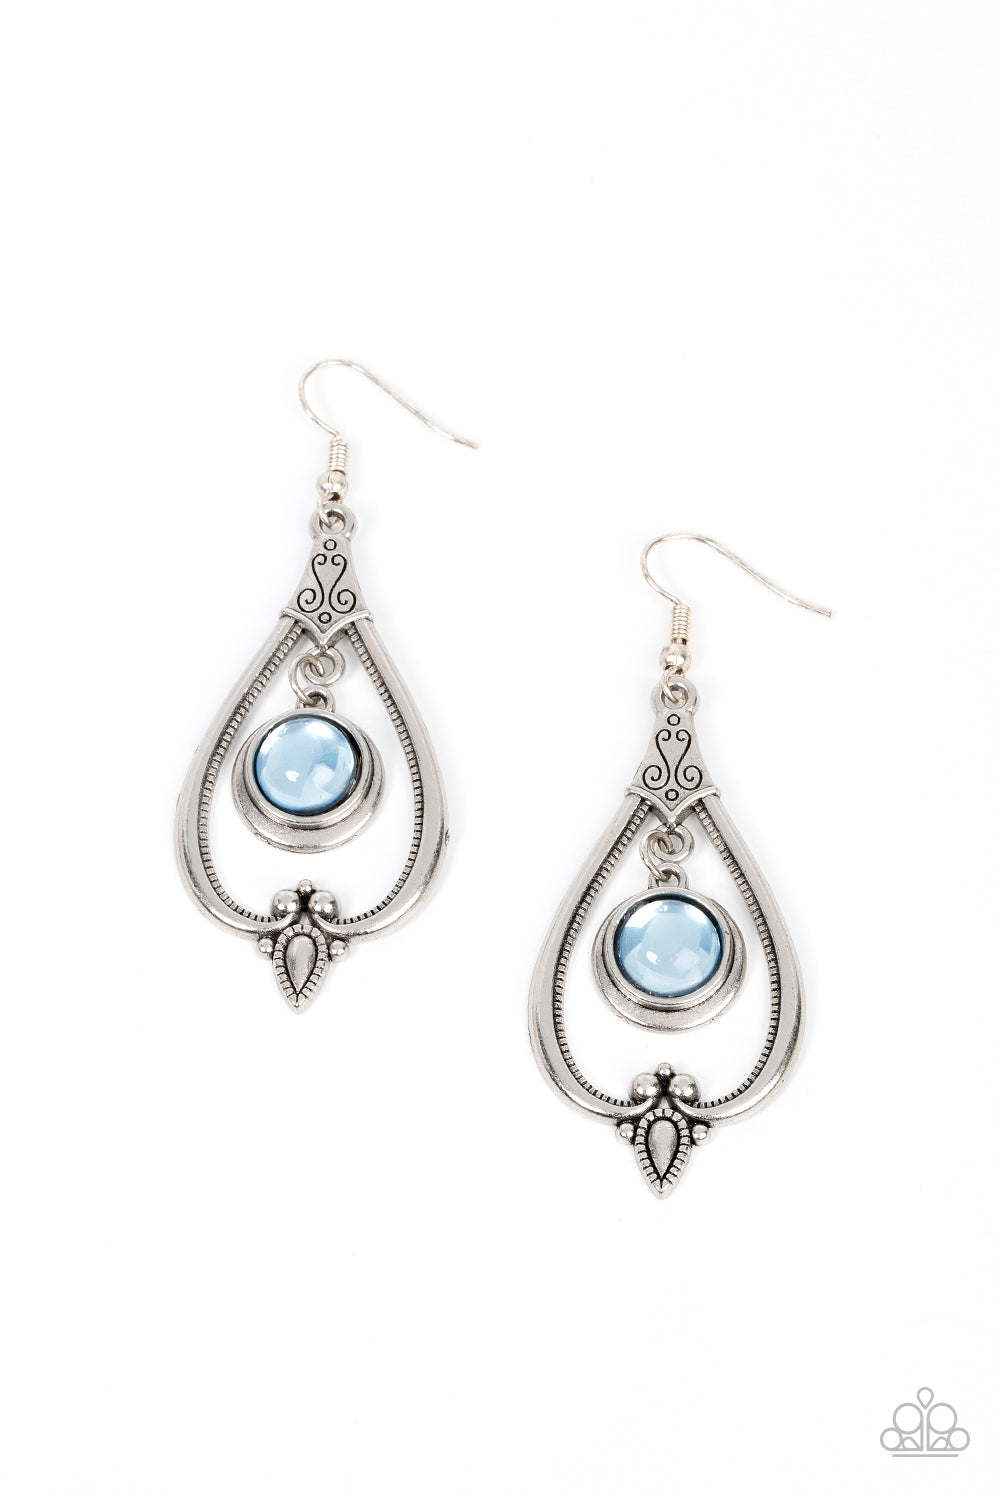 Ethereal Emblem - Blue Earrings